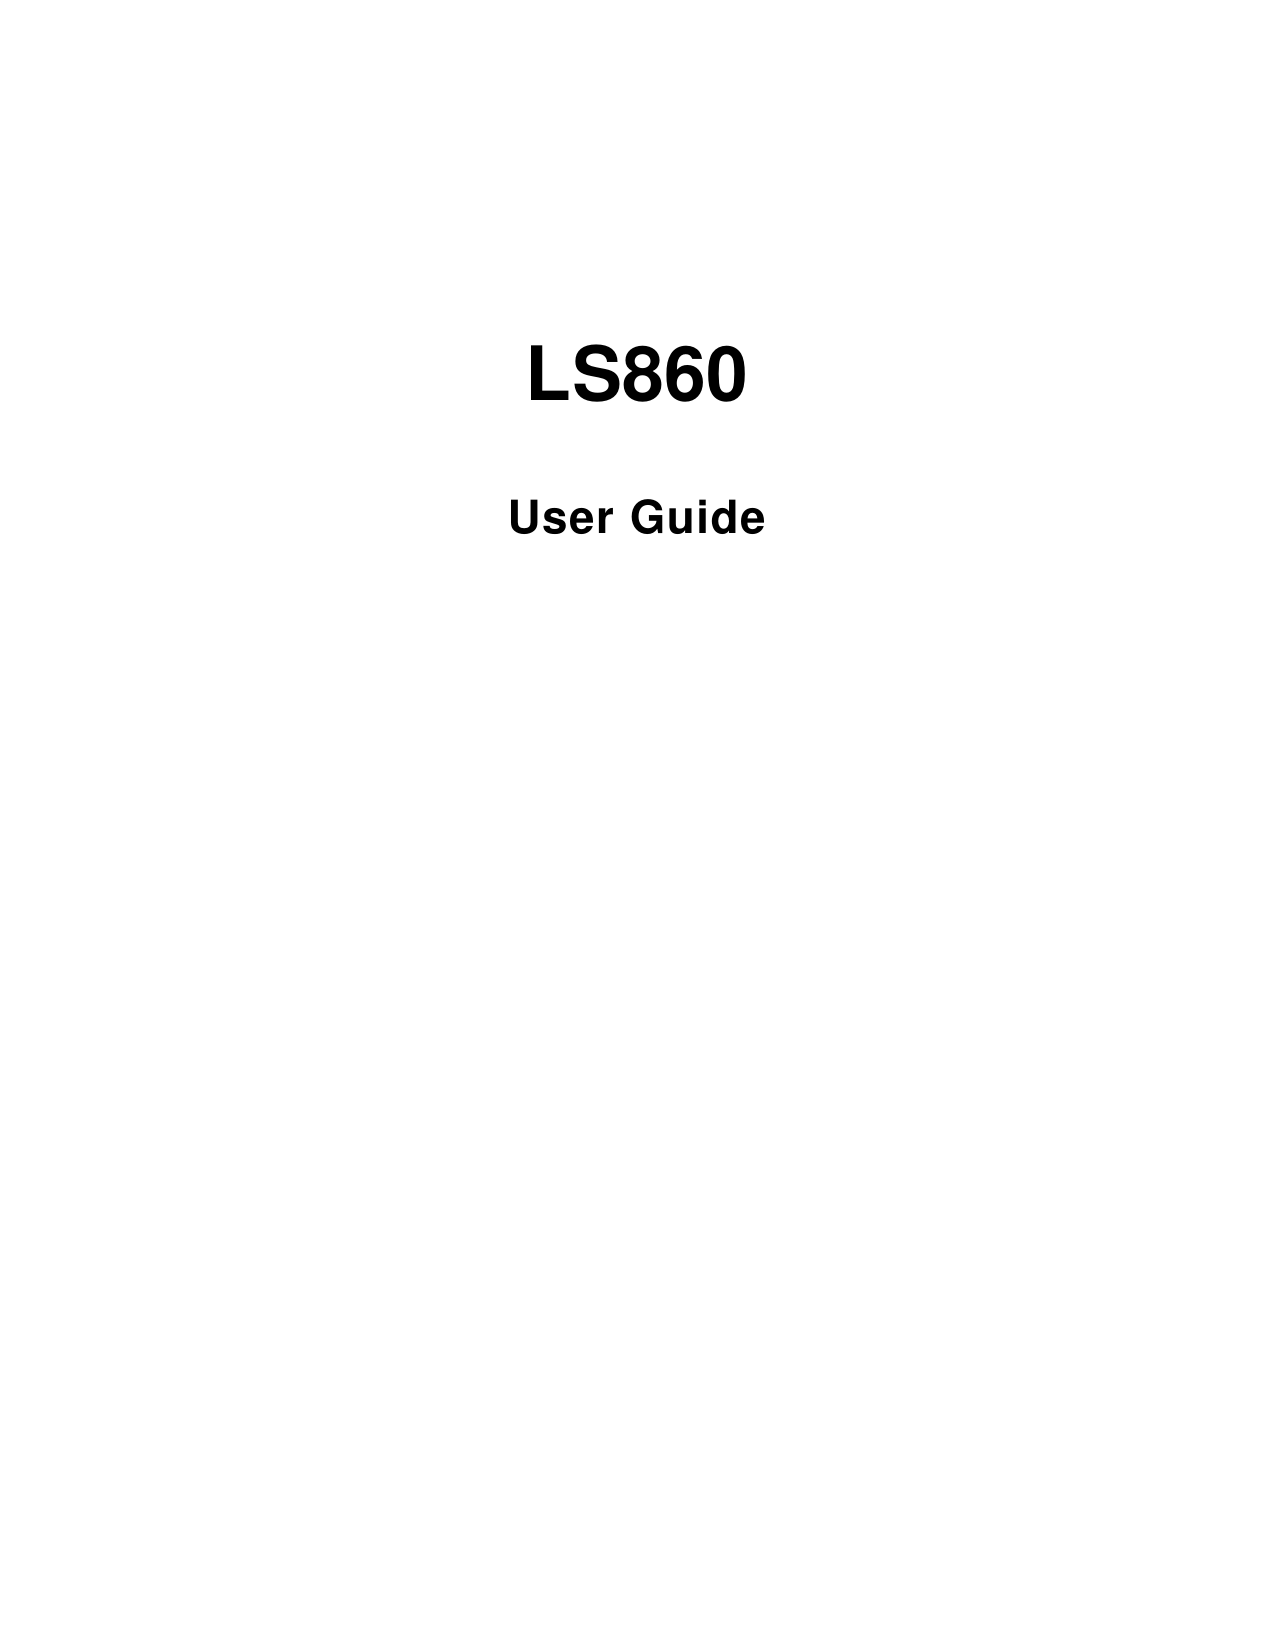      LS860 User Guide         